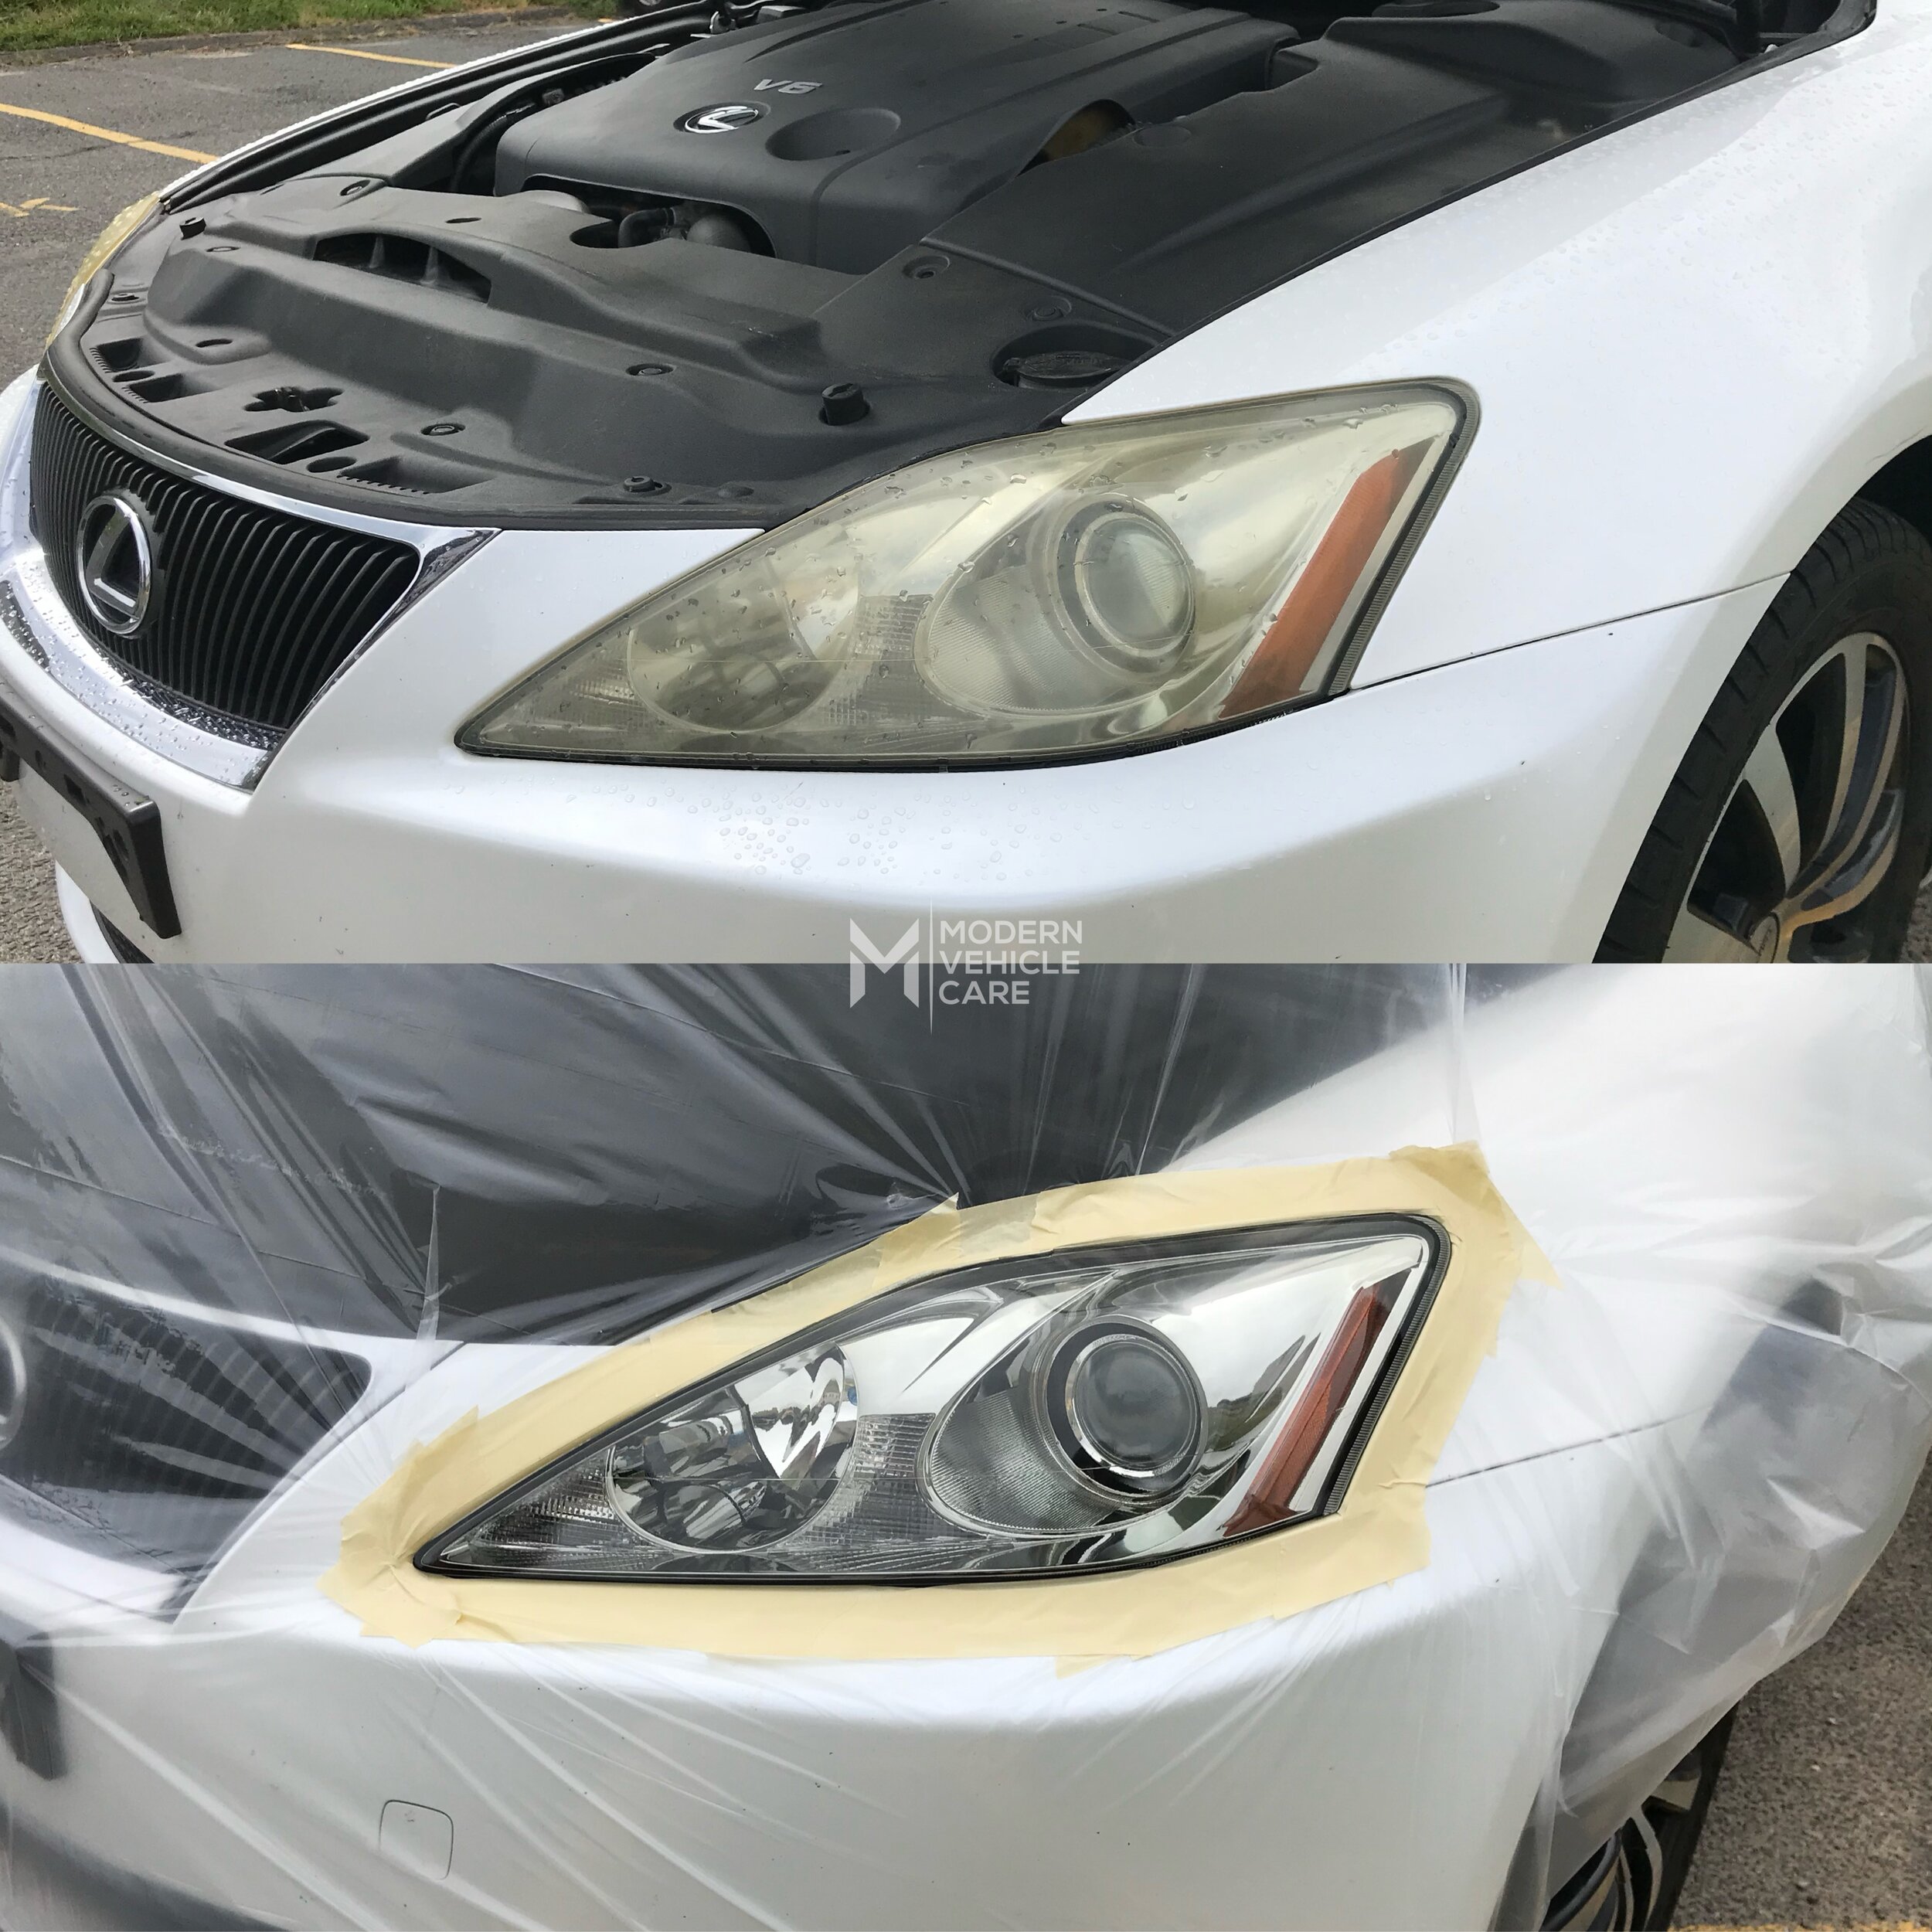 Lexus Headlights Restored.JPG